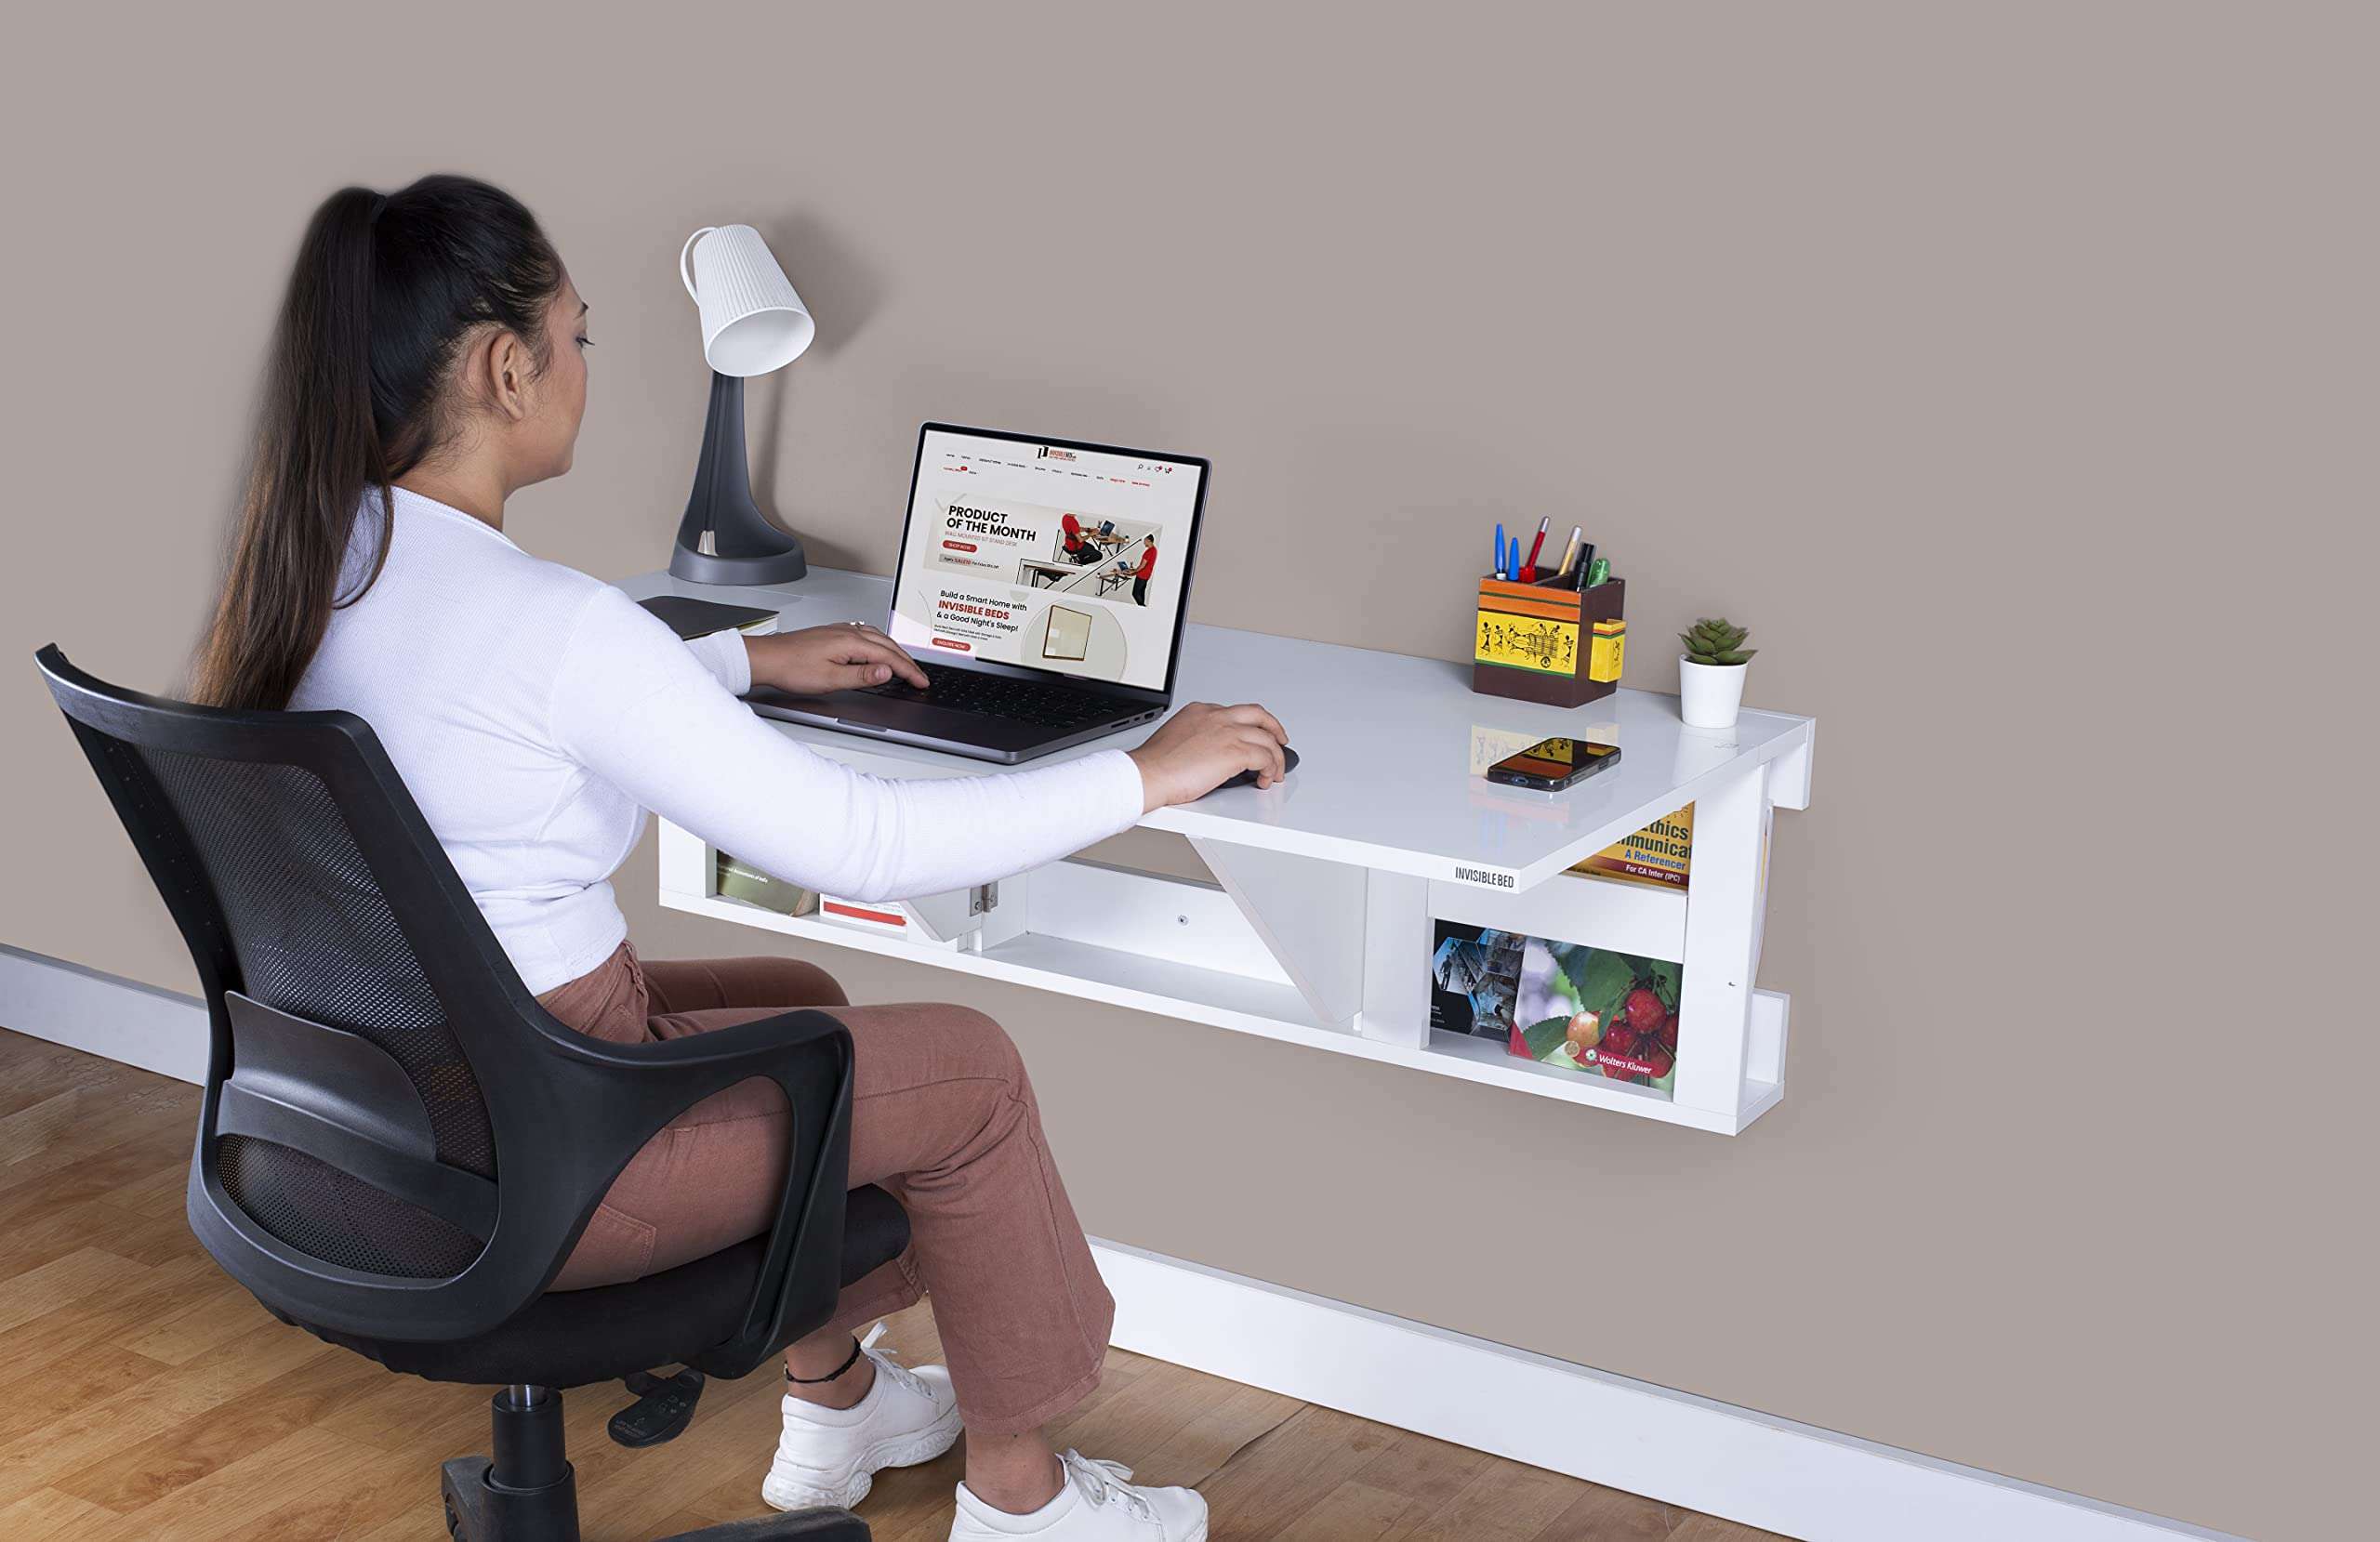 Home Office Folding Desk